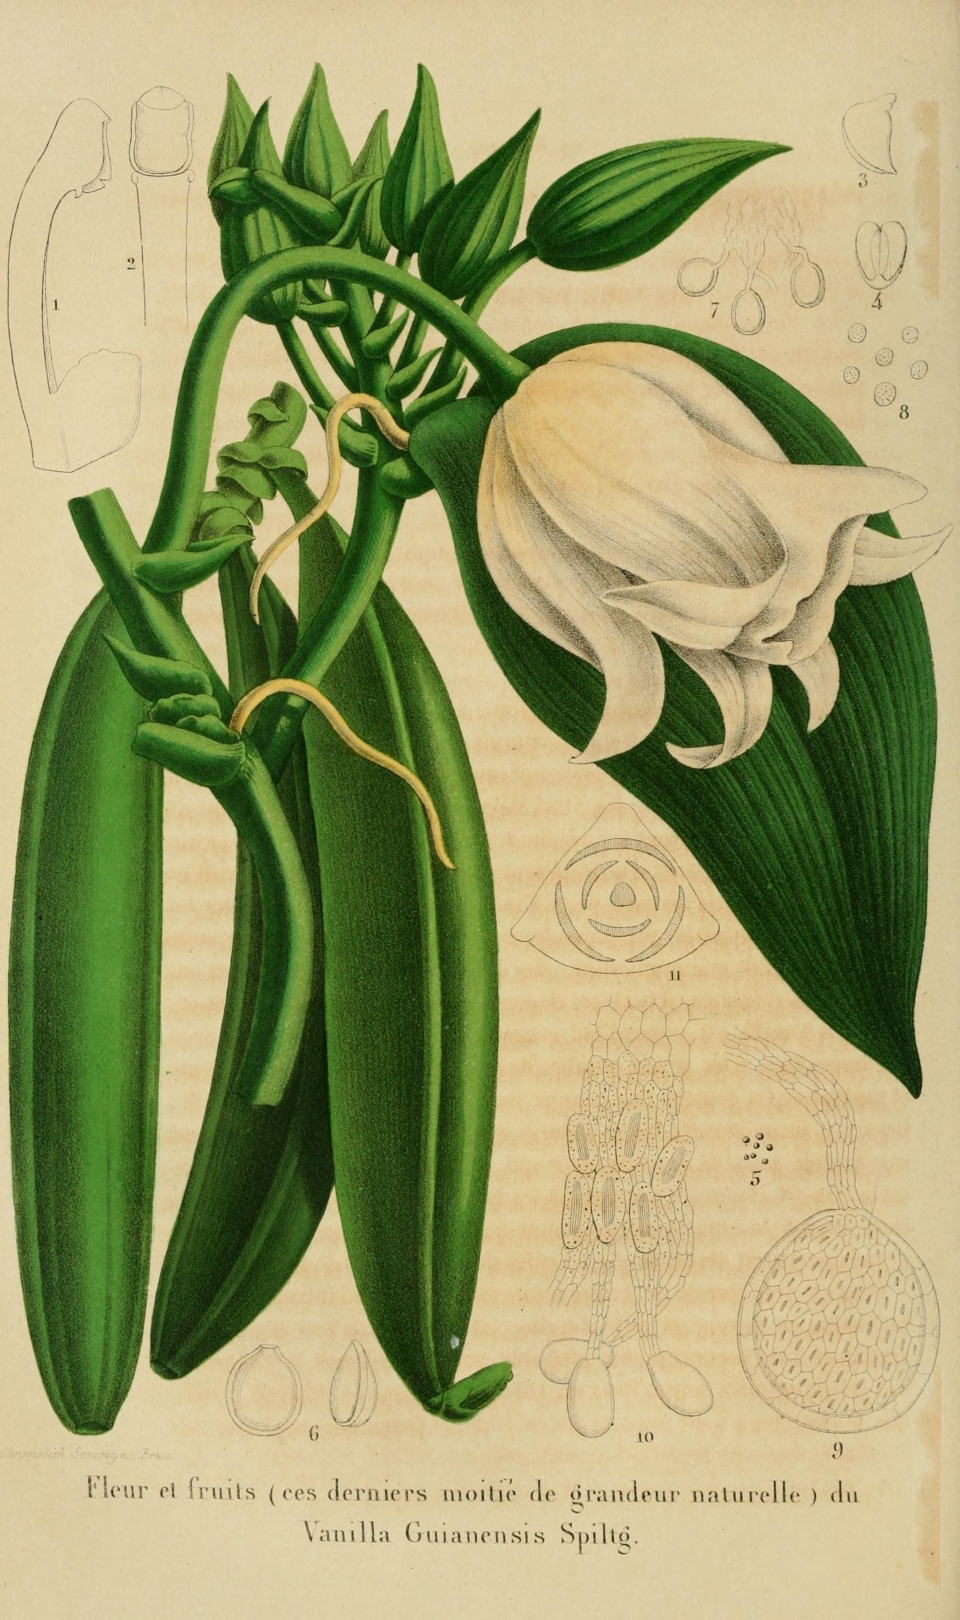 Vanilla guianensis